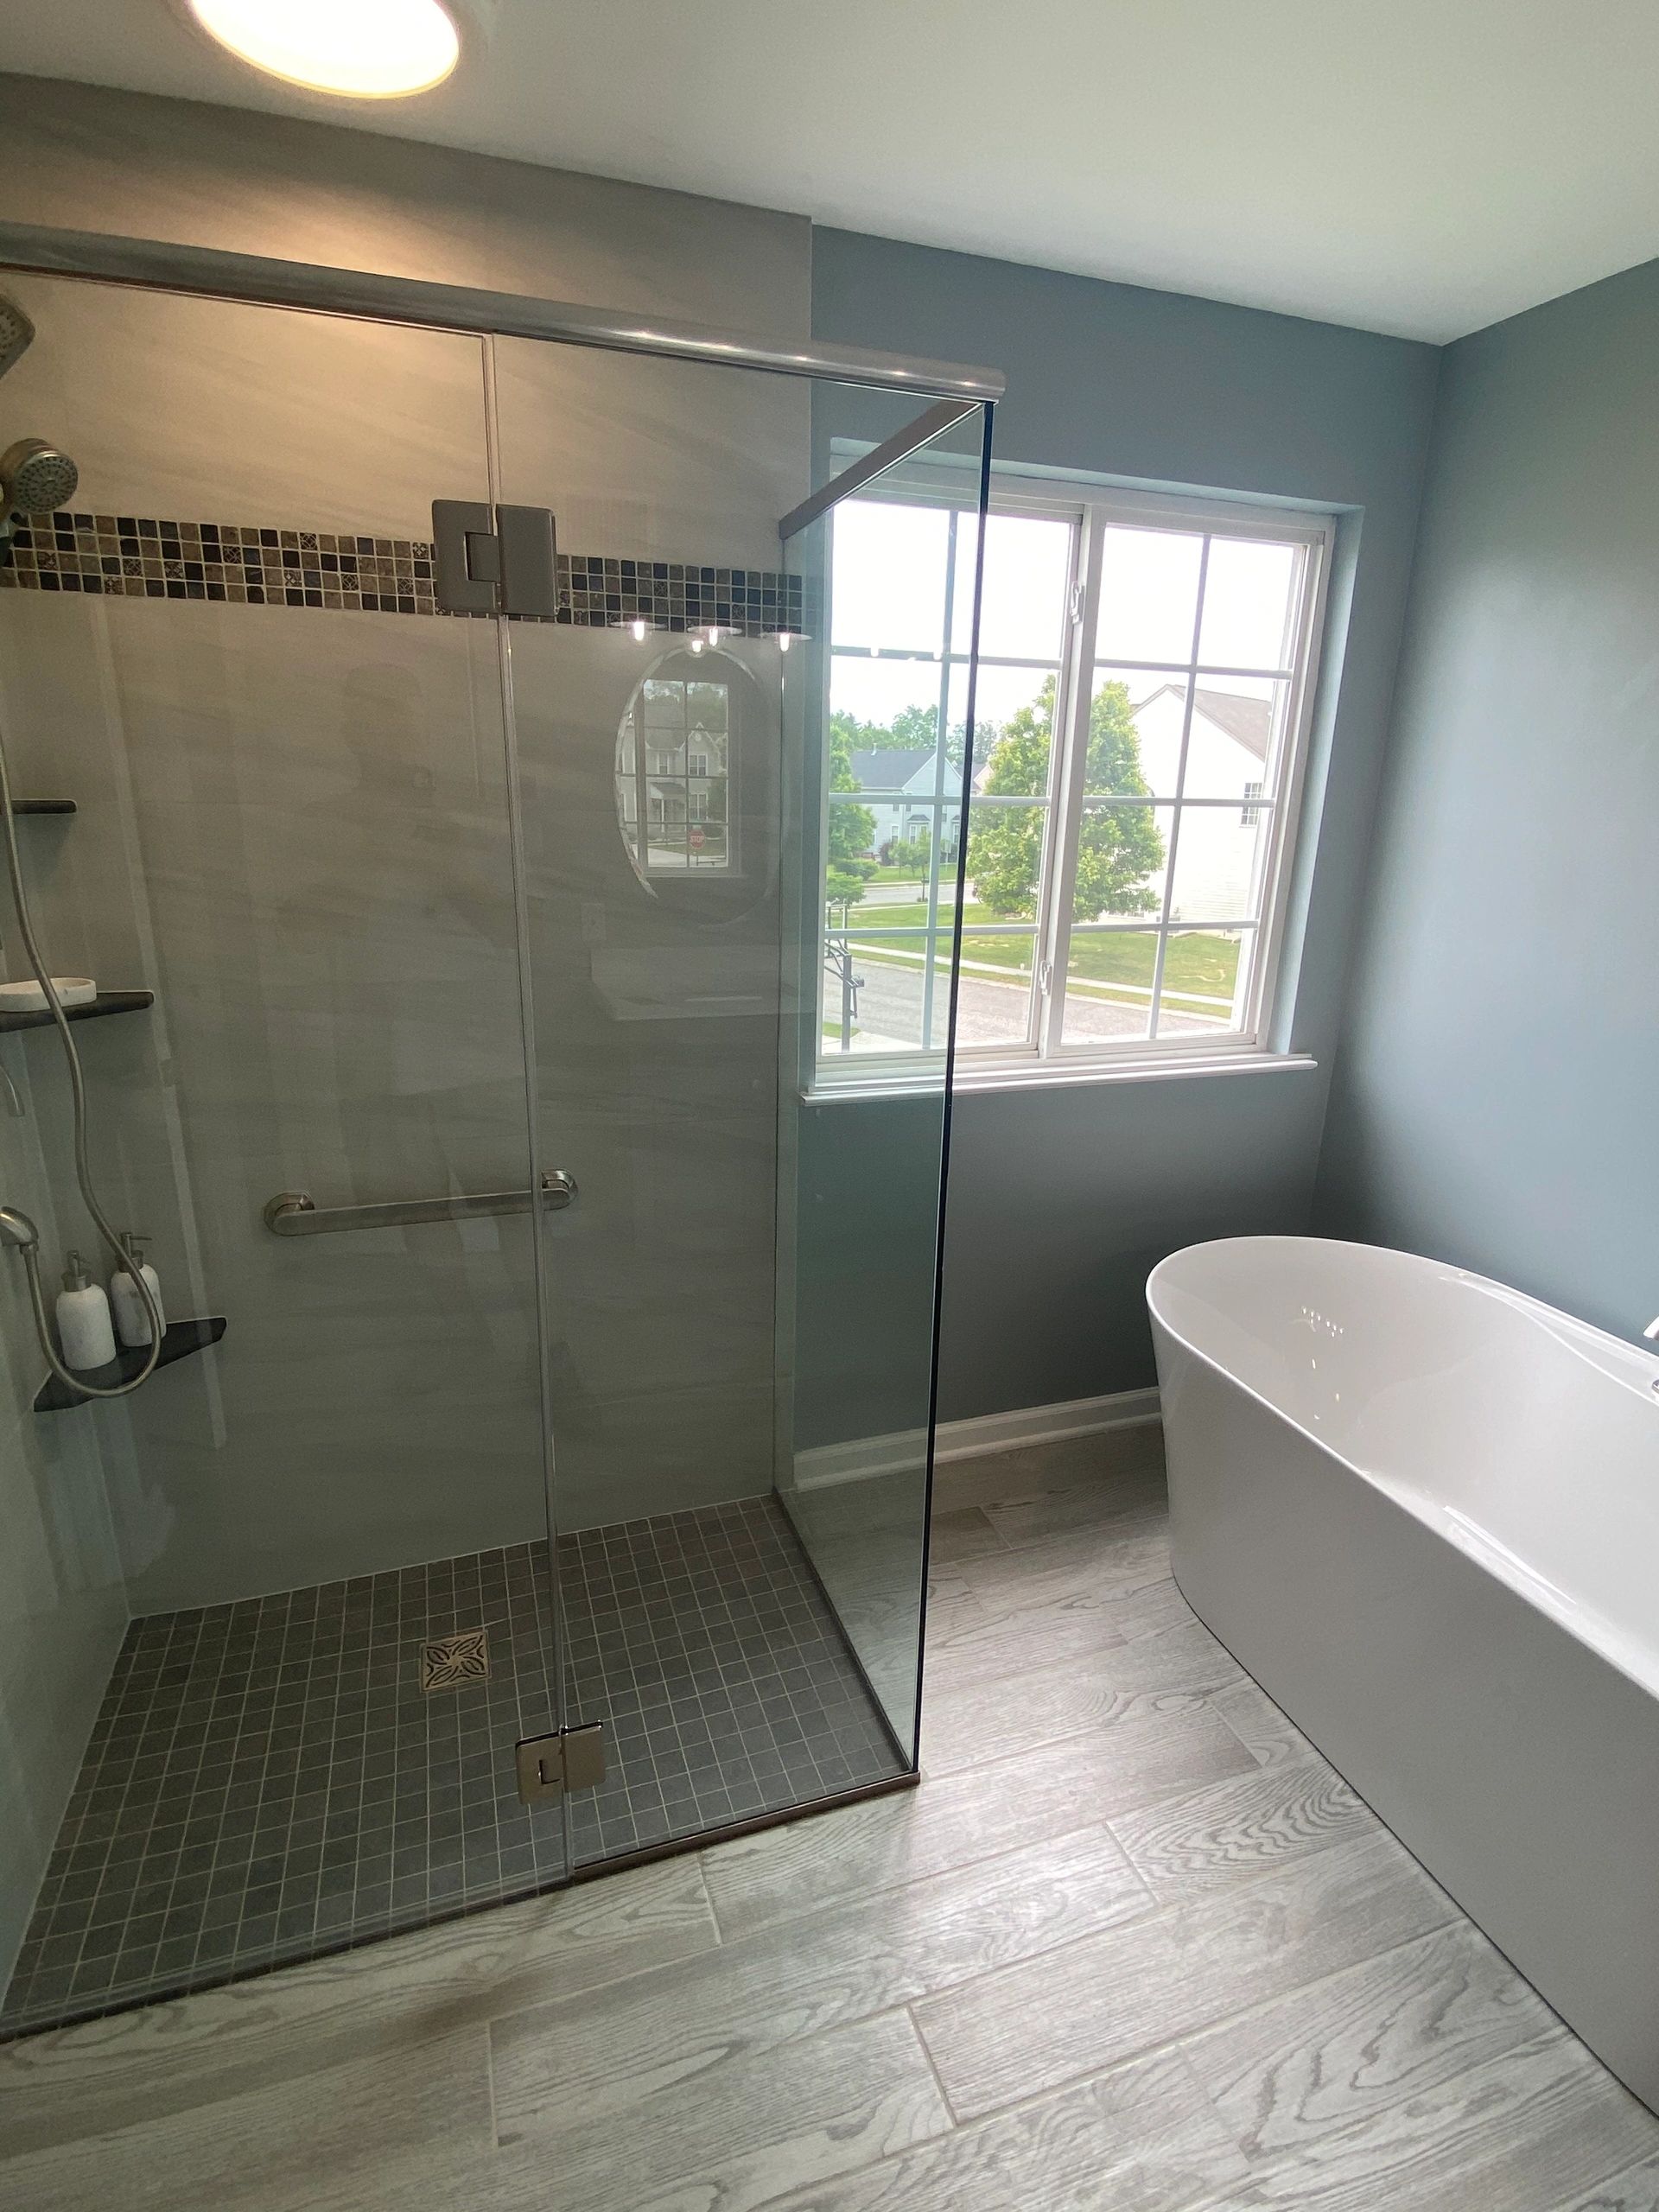 curbless shower, heated floor, soaking tub, bathroom remodel